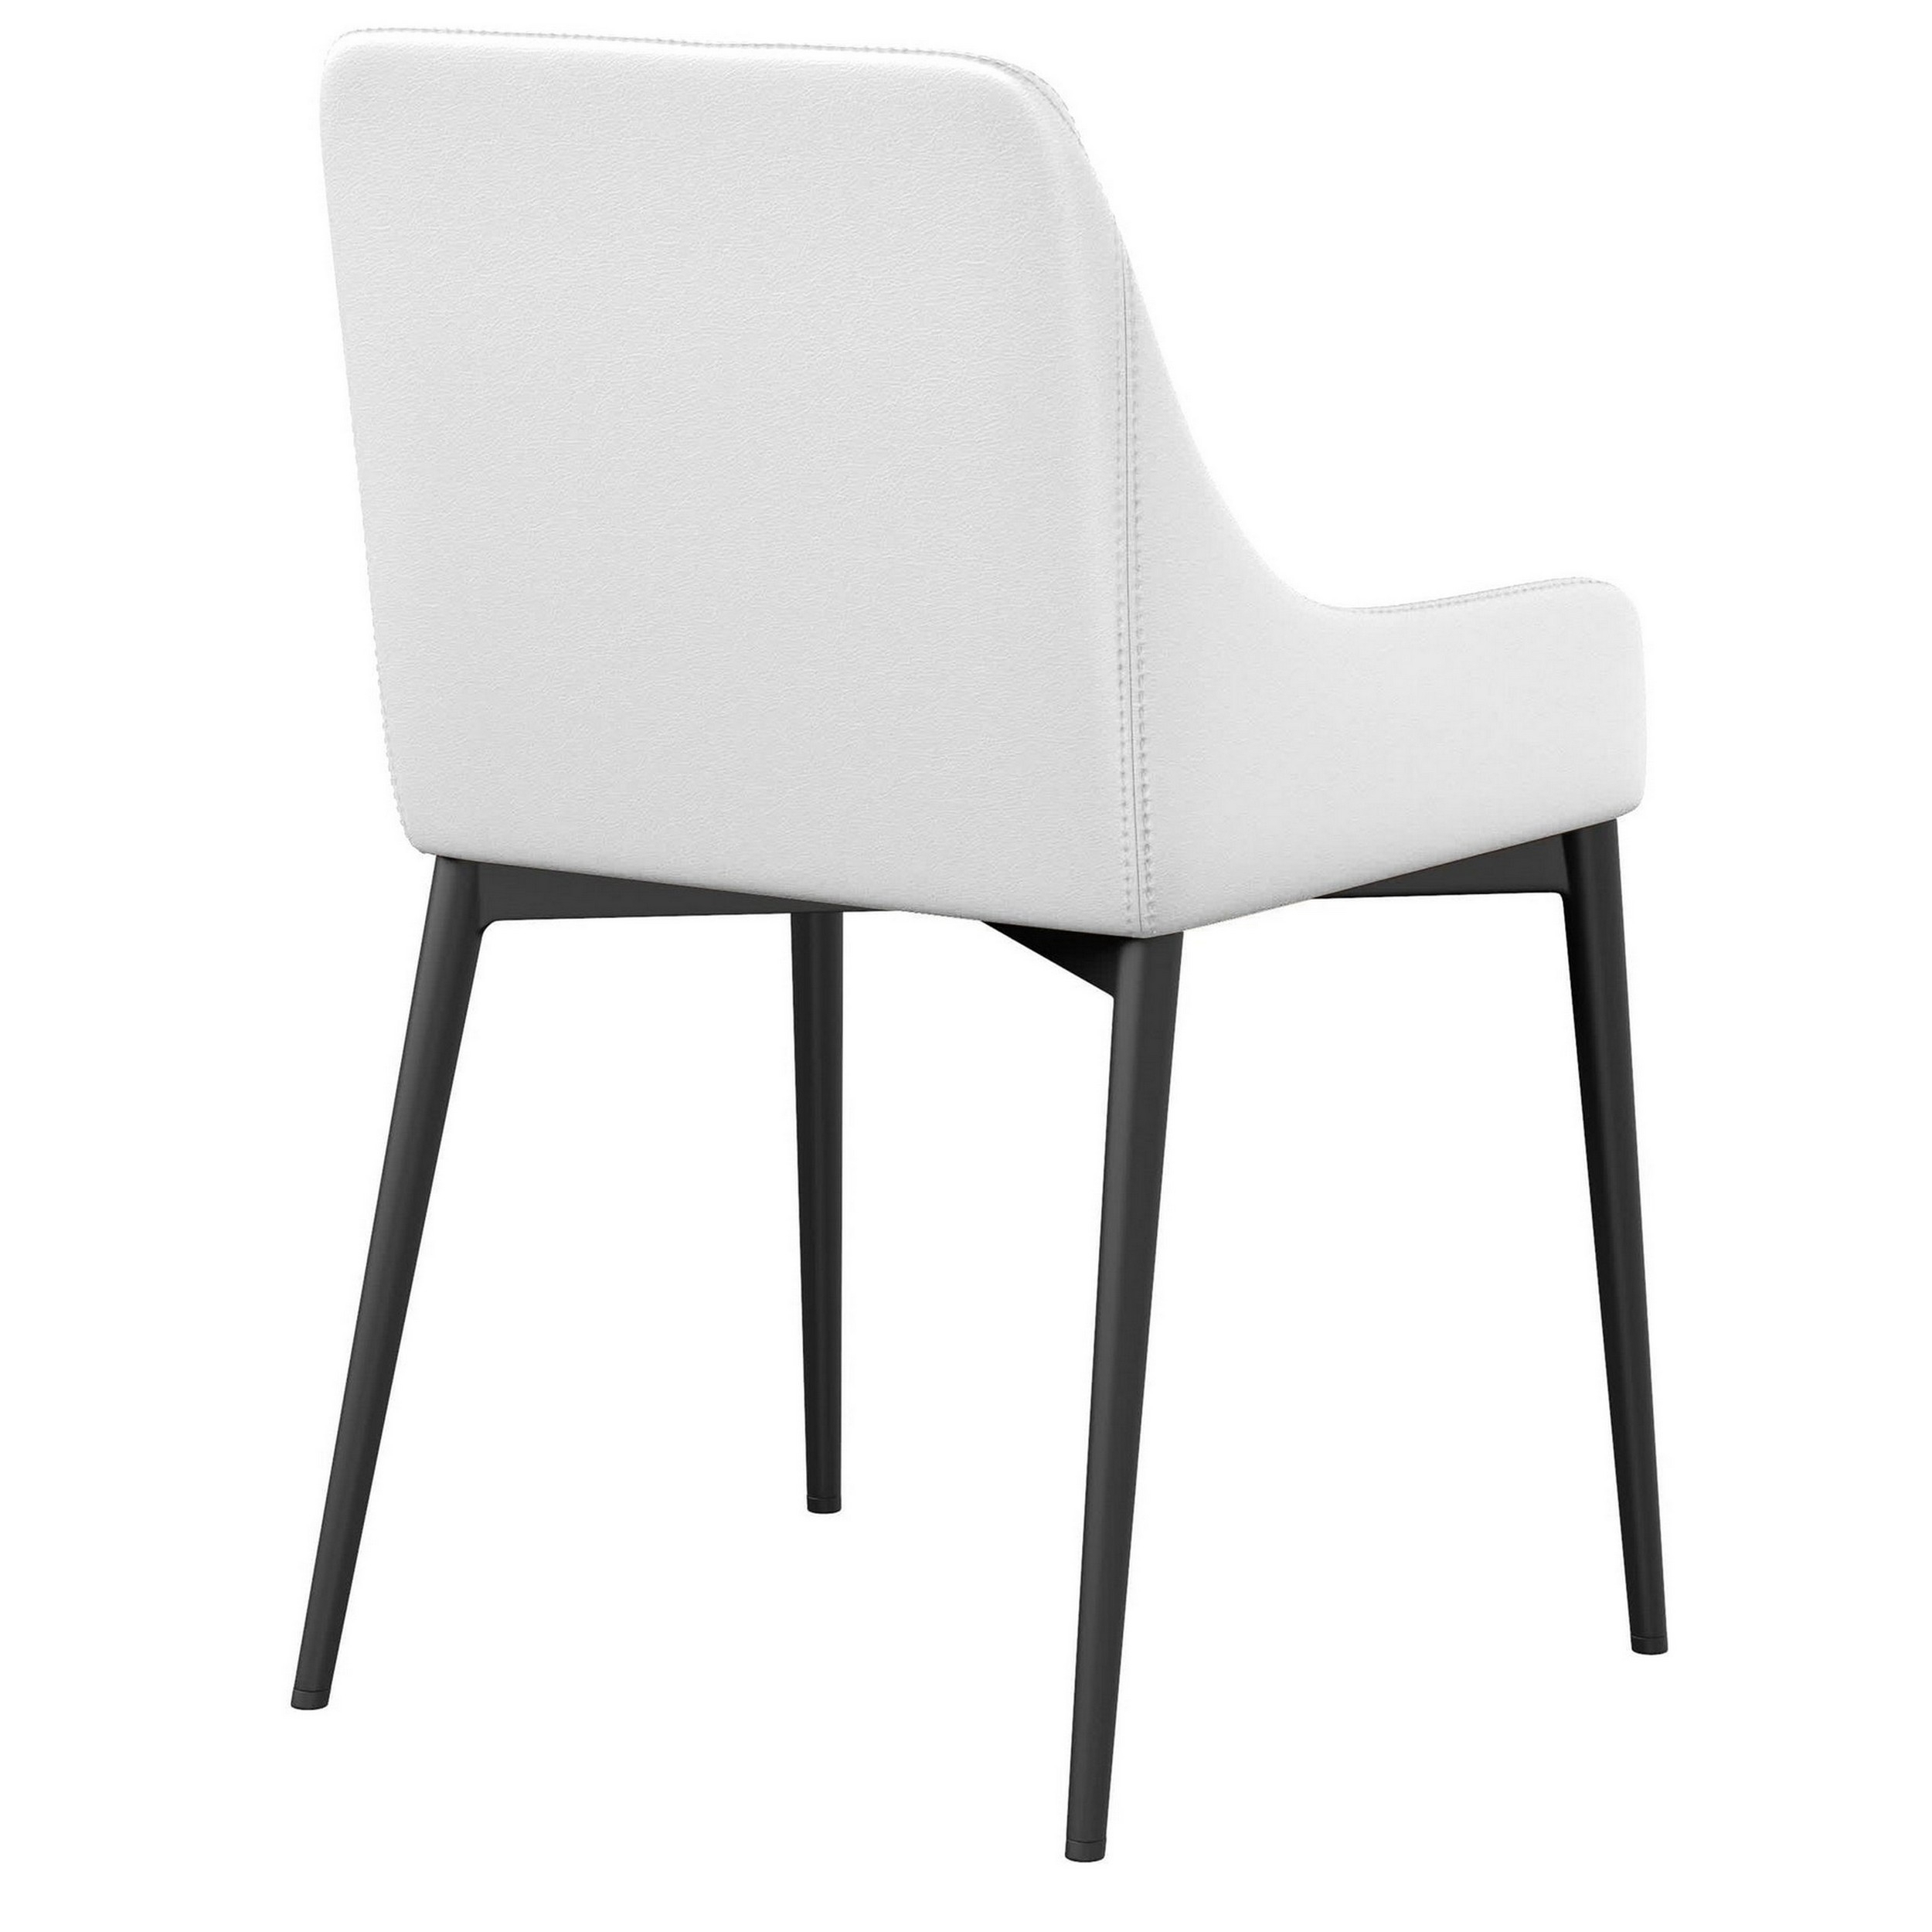 Zvi 21 Inch Cushioned Dining Chair, Set Of 2, Sloped Arms, White, Black- Saltoro Sherpi